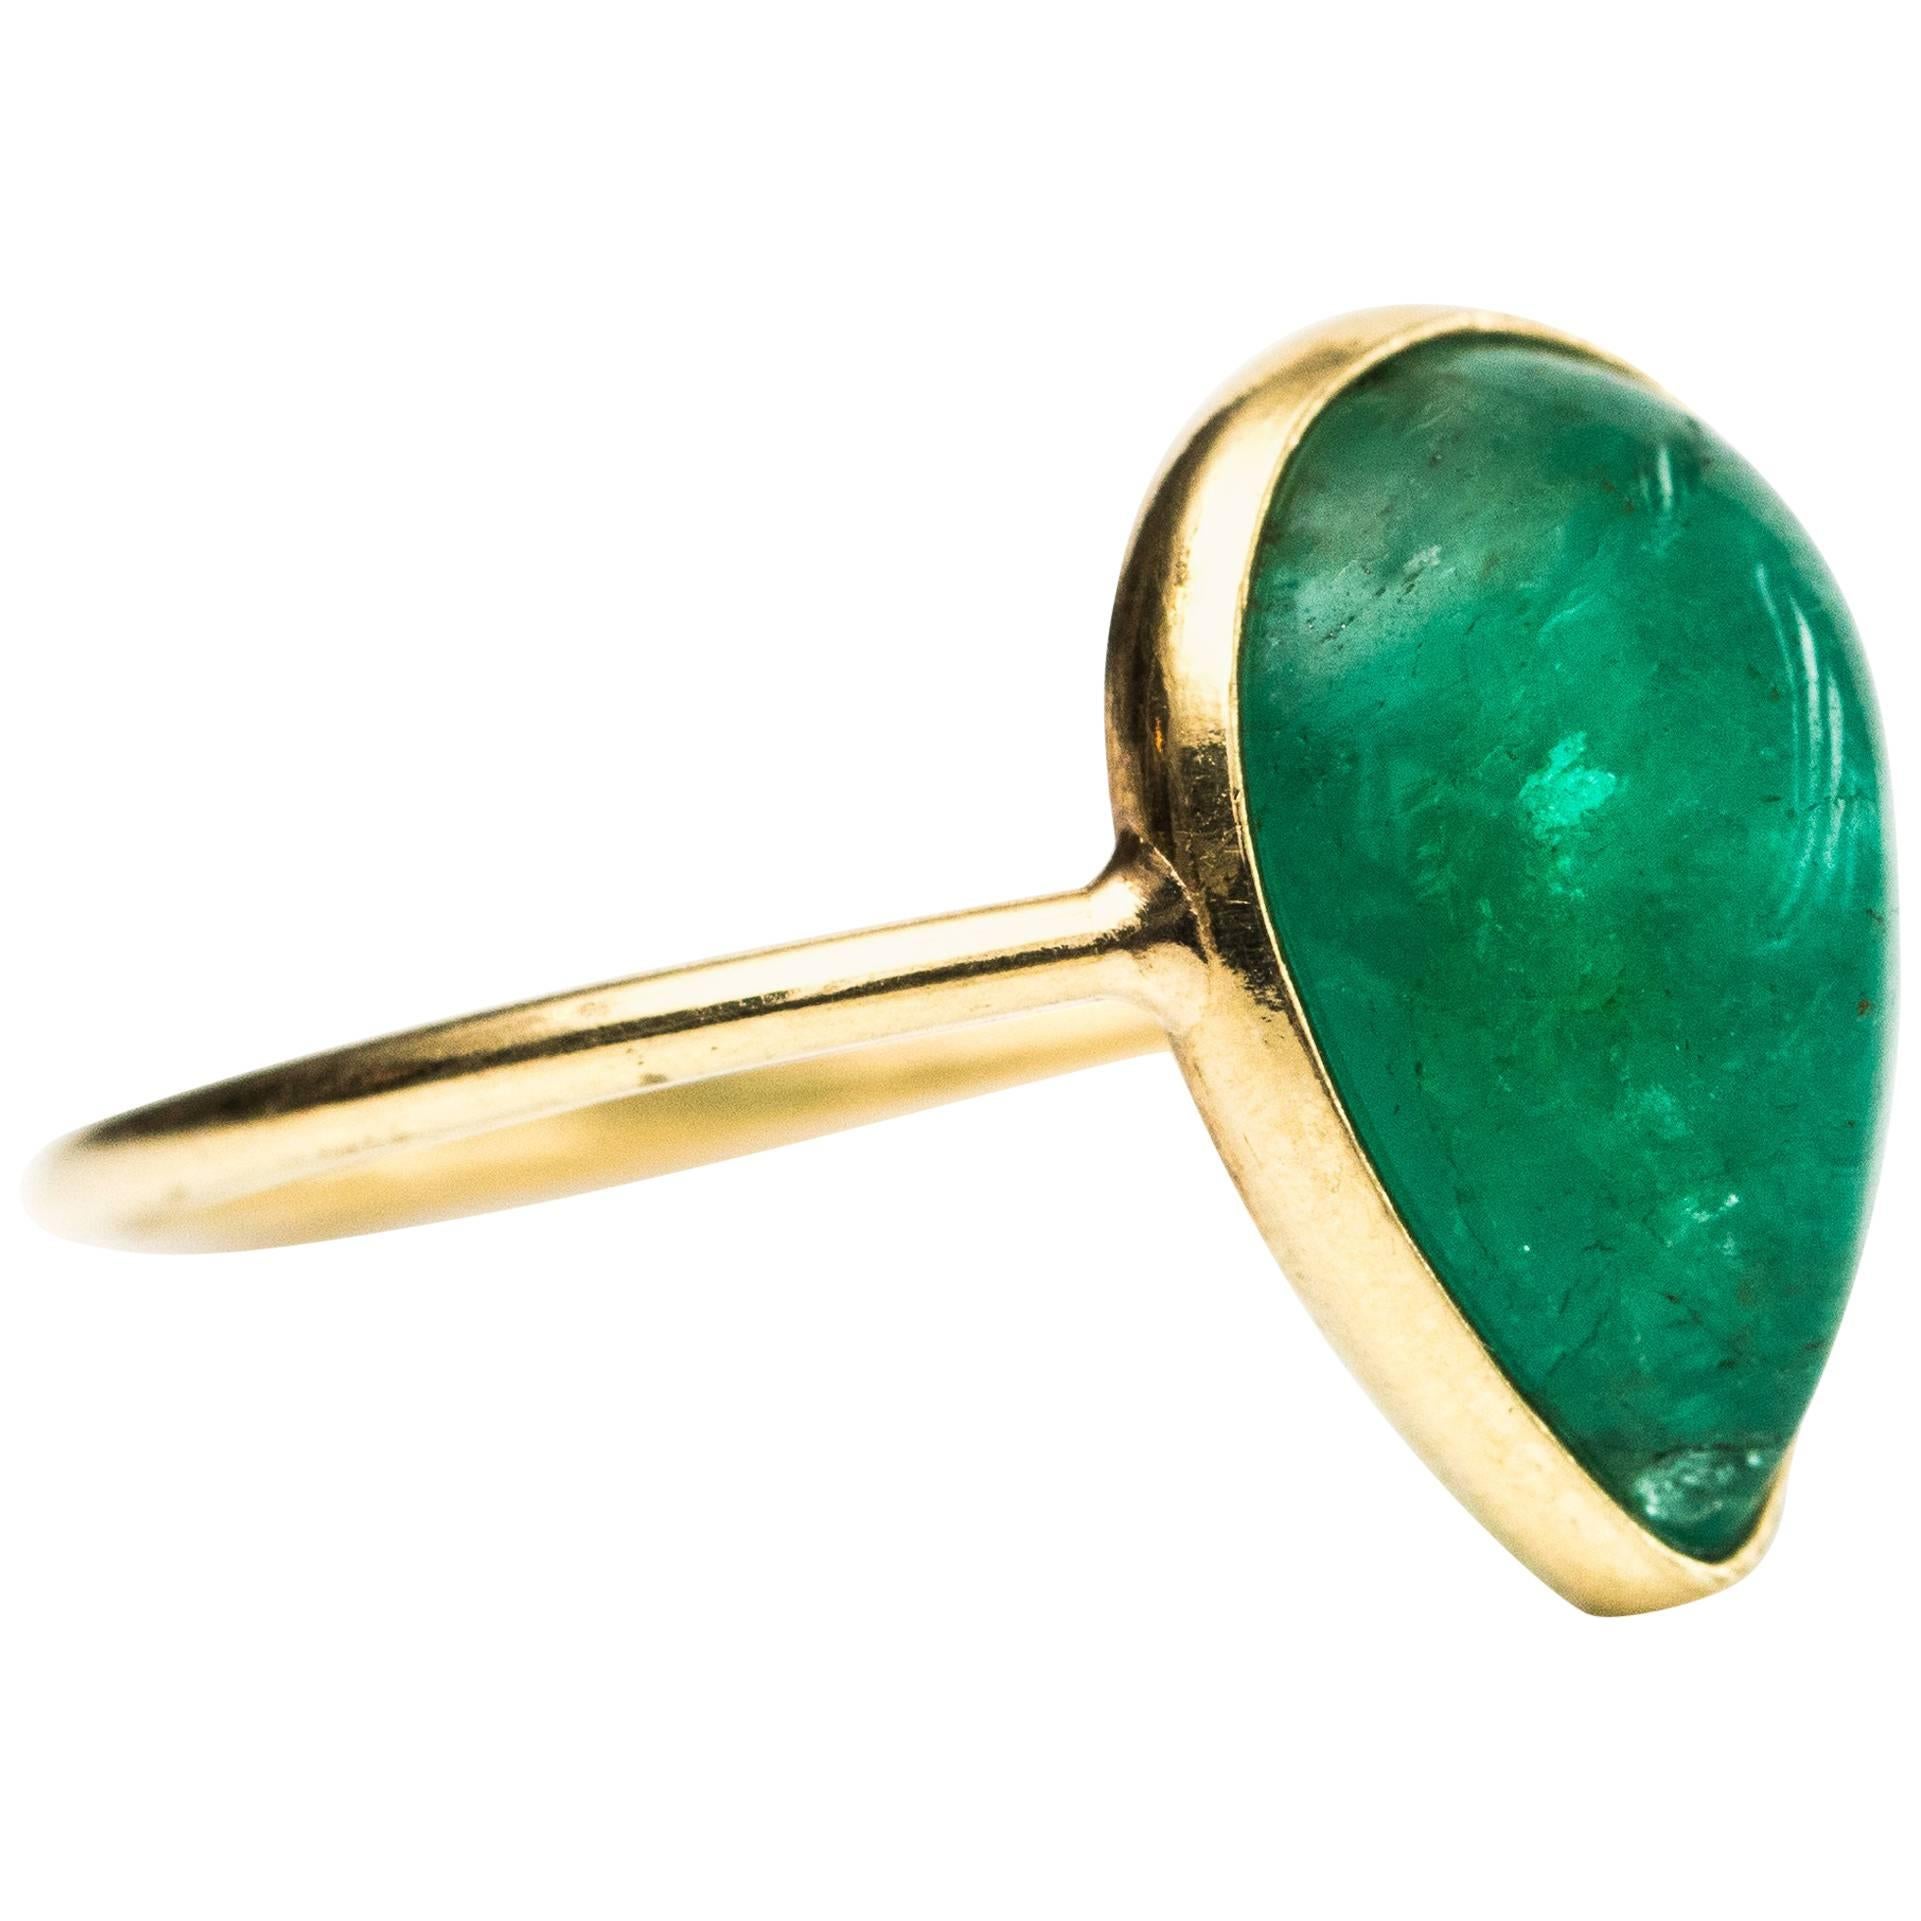 2.2 Carat Pear Cut Emerald and 18 Karat Yellow Gold Ring